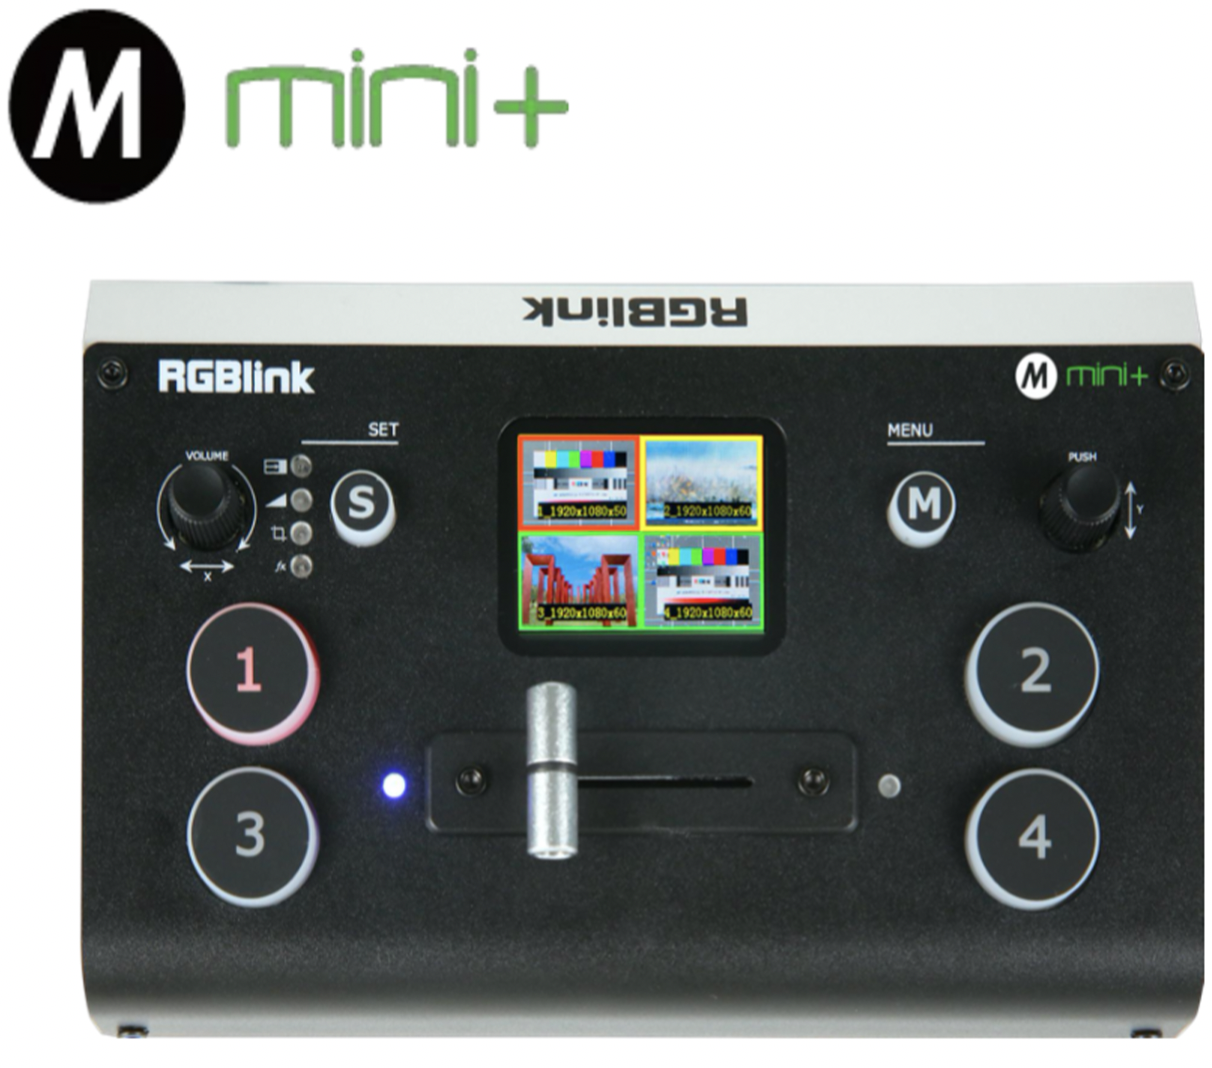 RGBlink 映像配信スイッチャー『RGBlink mini』